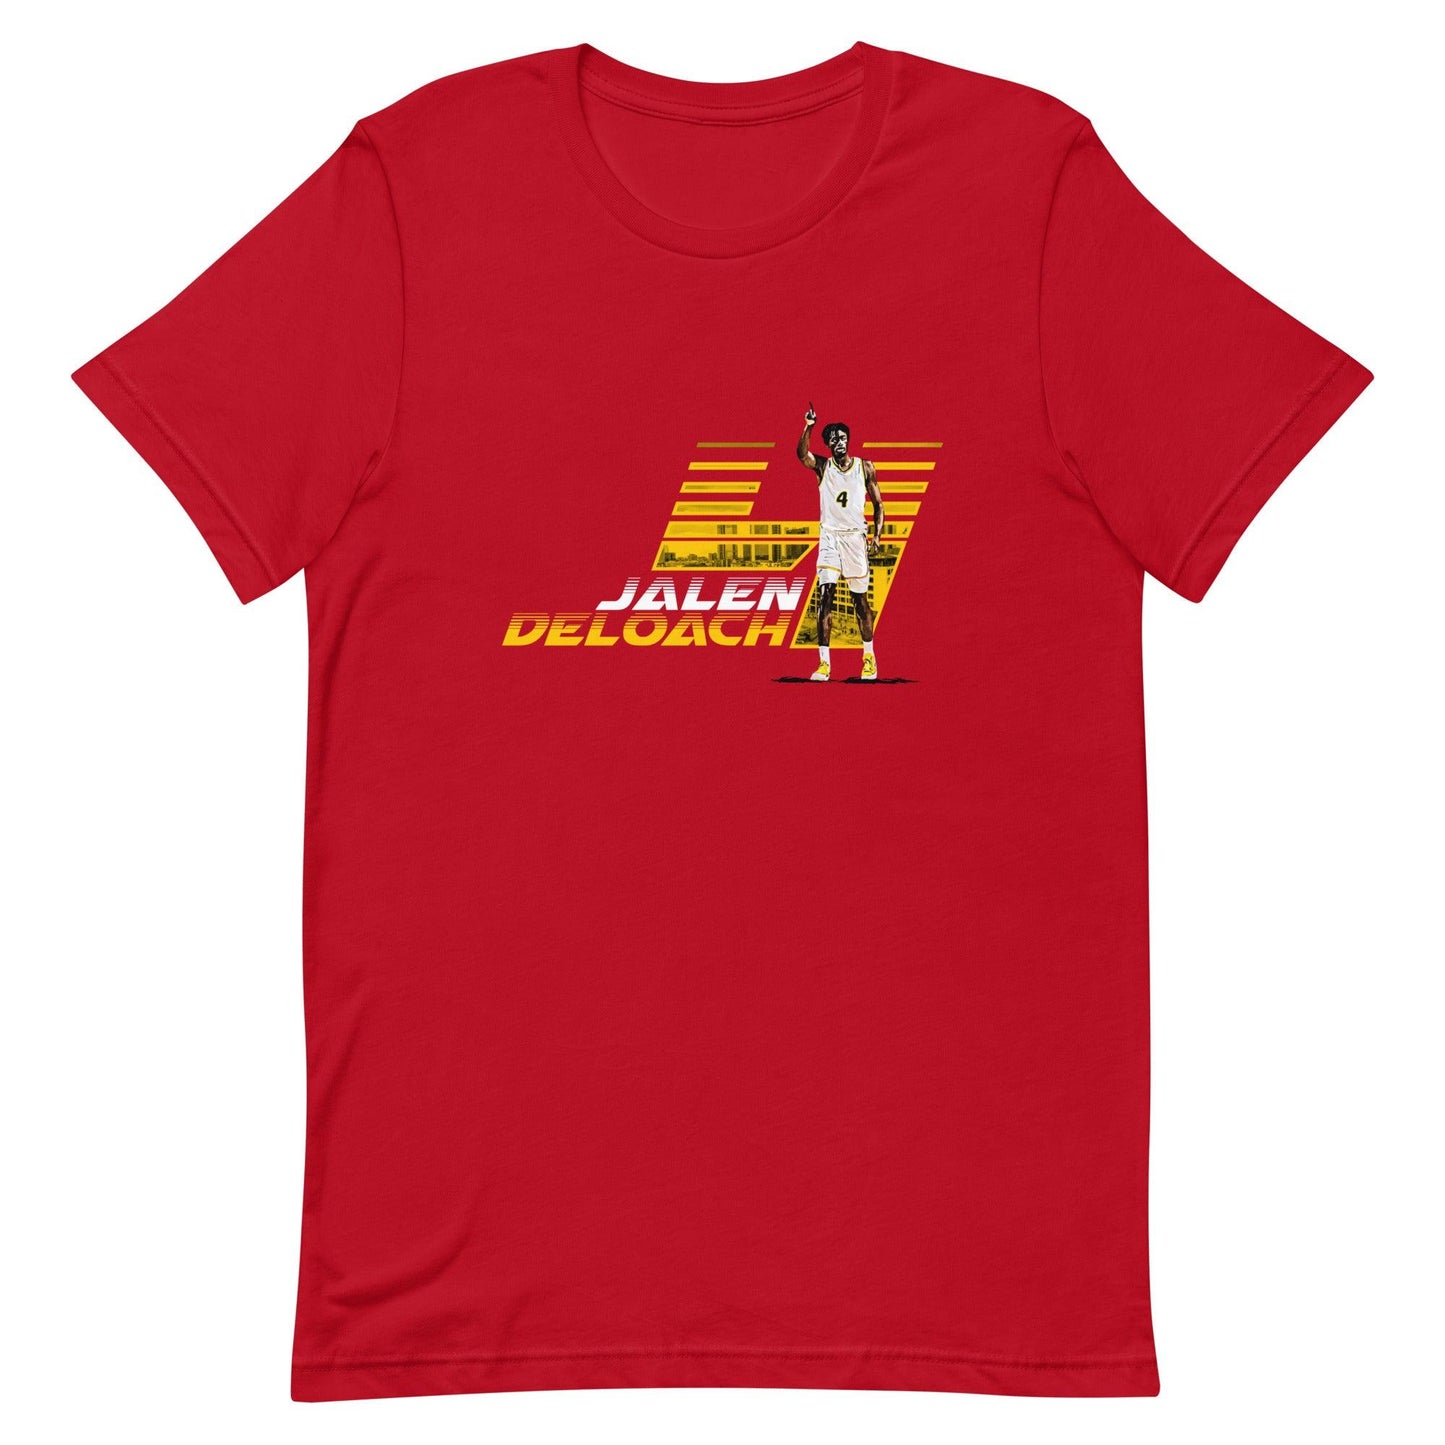 Jalen Deloach "Limited Edition" t-shirt - Fan Arch